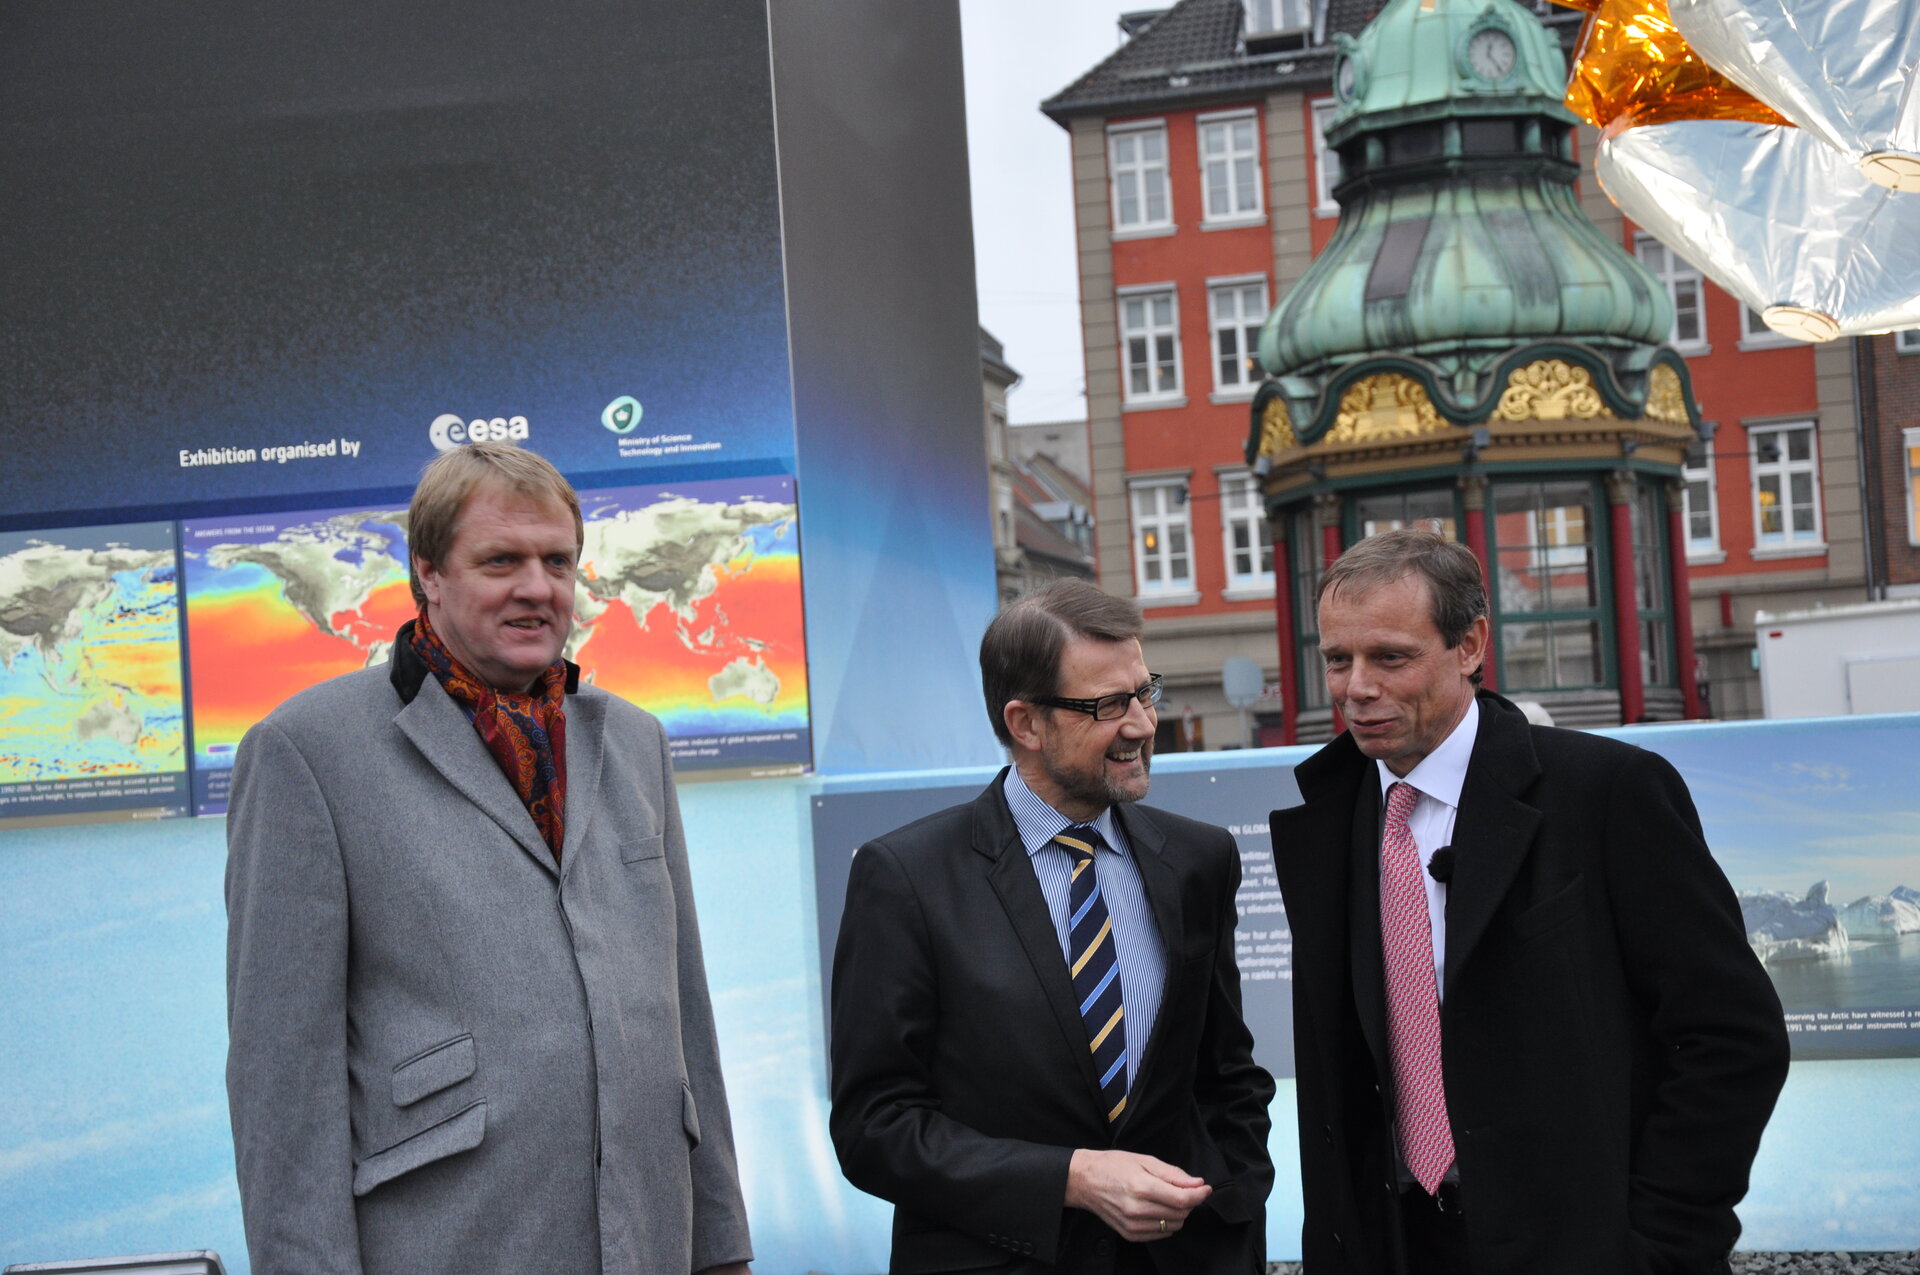 P. Hulsroj, H. Sander and C. Fuglesang in front of ESA's exhibit